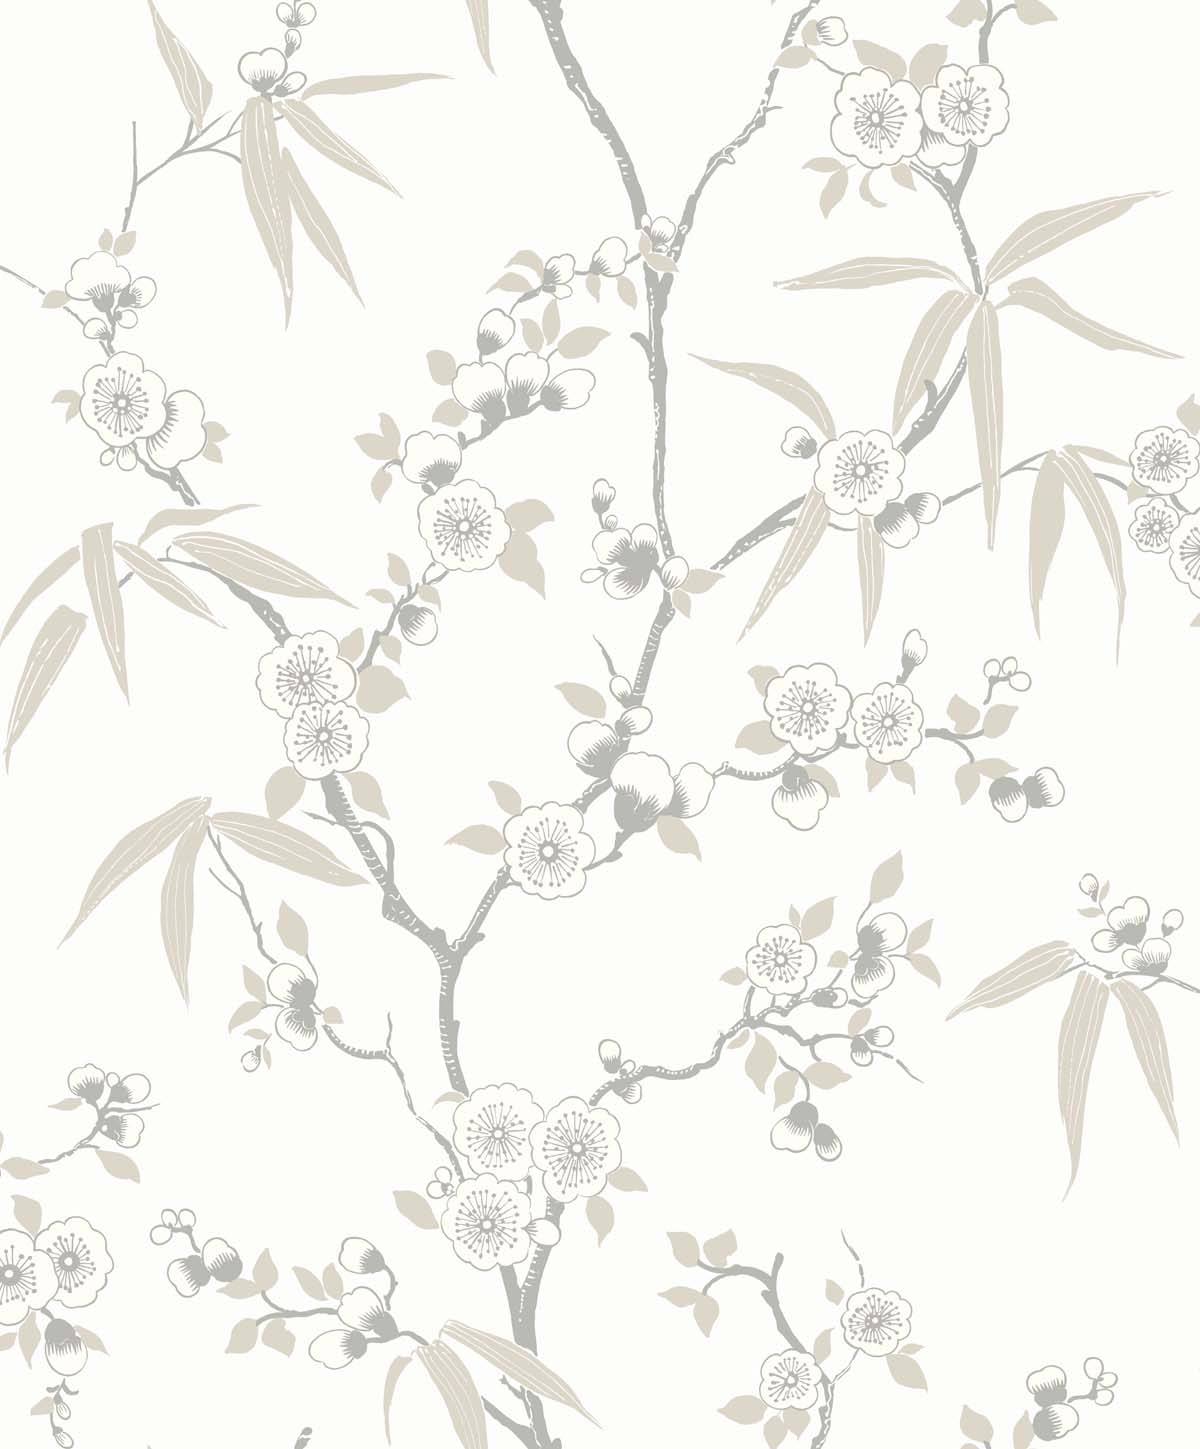 EW11107 | Floral Blossom Trail, Beige - Seabrook Designs Wallpaper